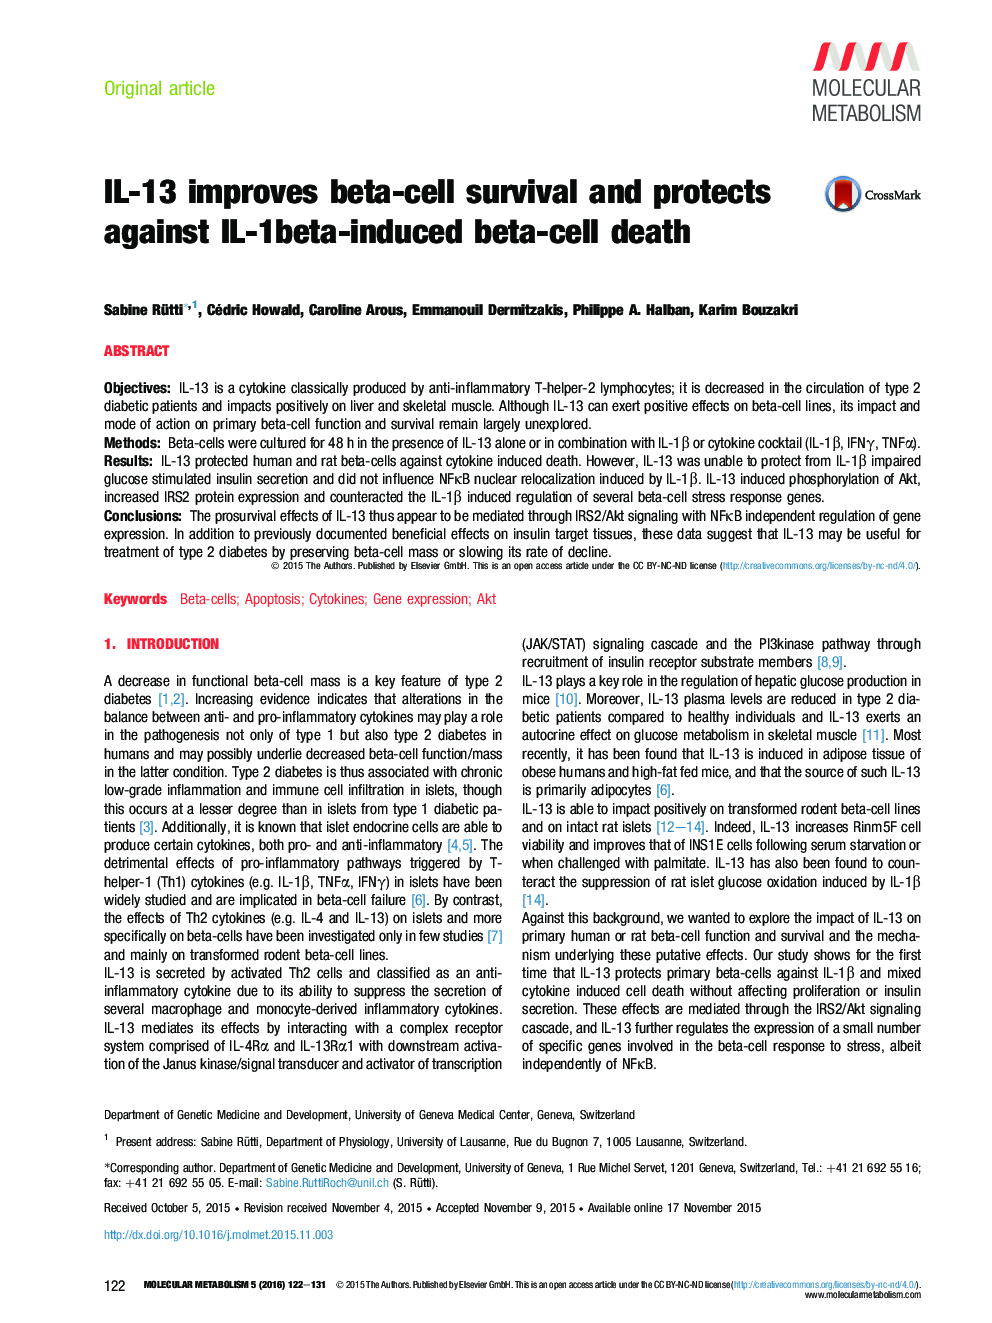 IL-13 بقای سلول بتا را بهبود می بخشد و در برابر مرگ سلول های بتای القا شده IL-1 بتا محافظت می کند